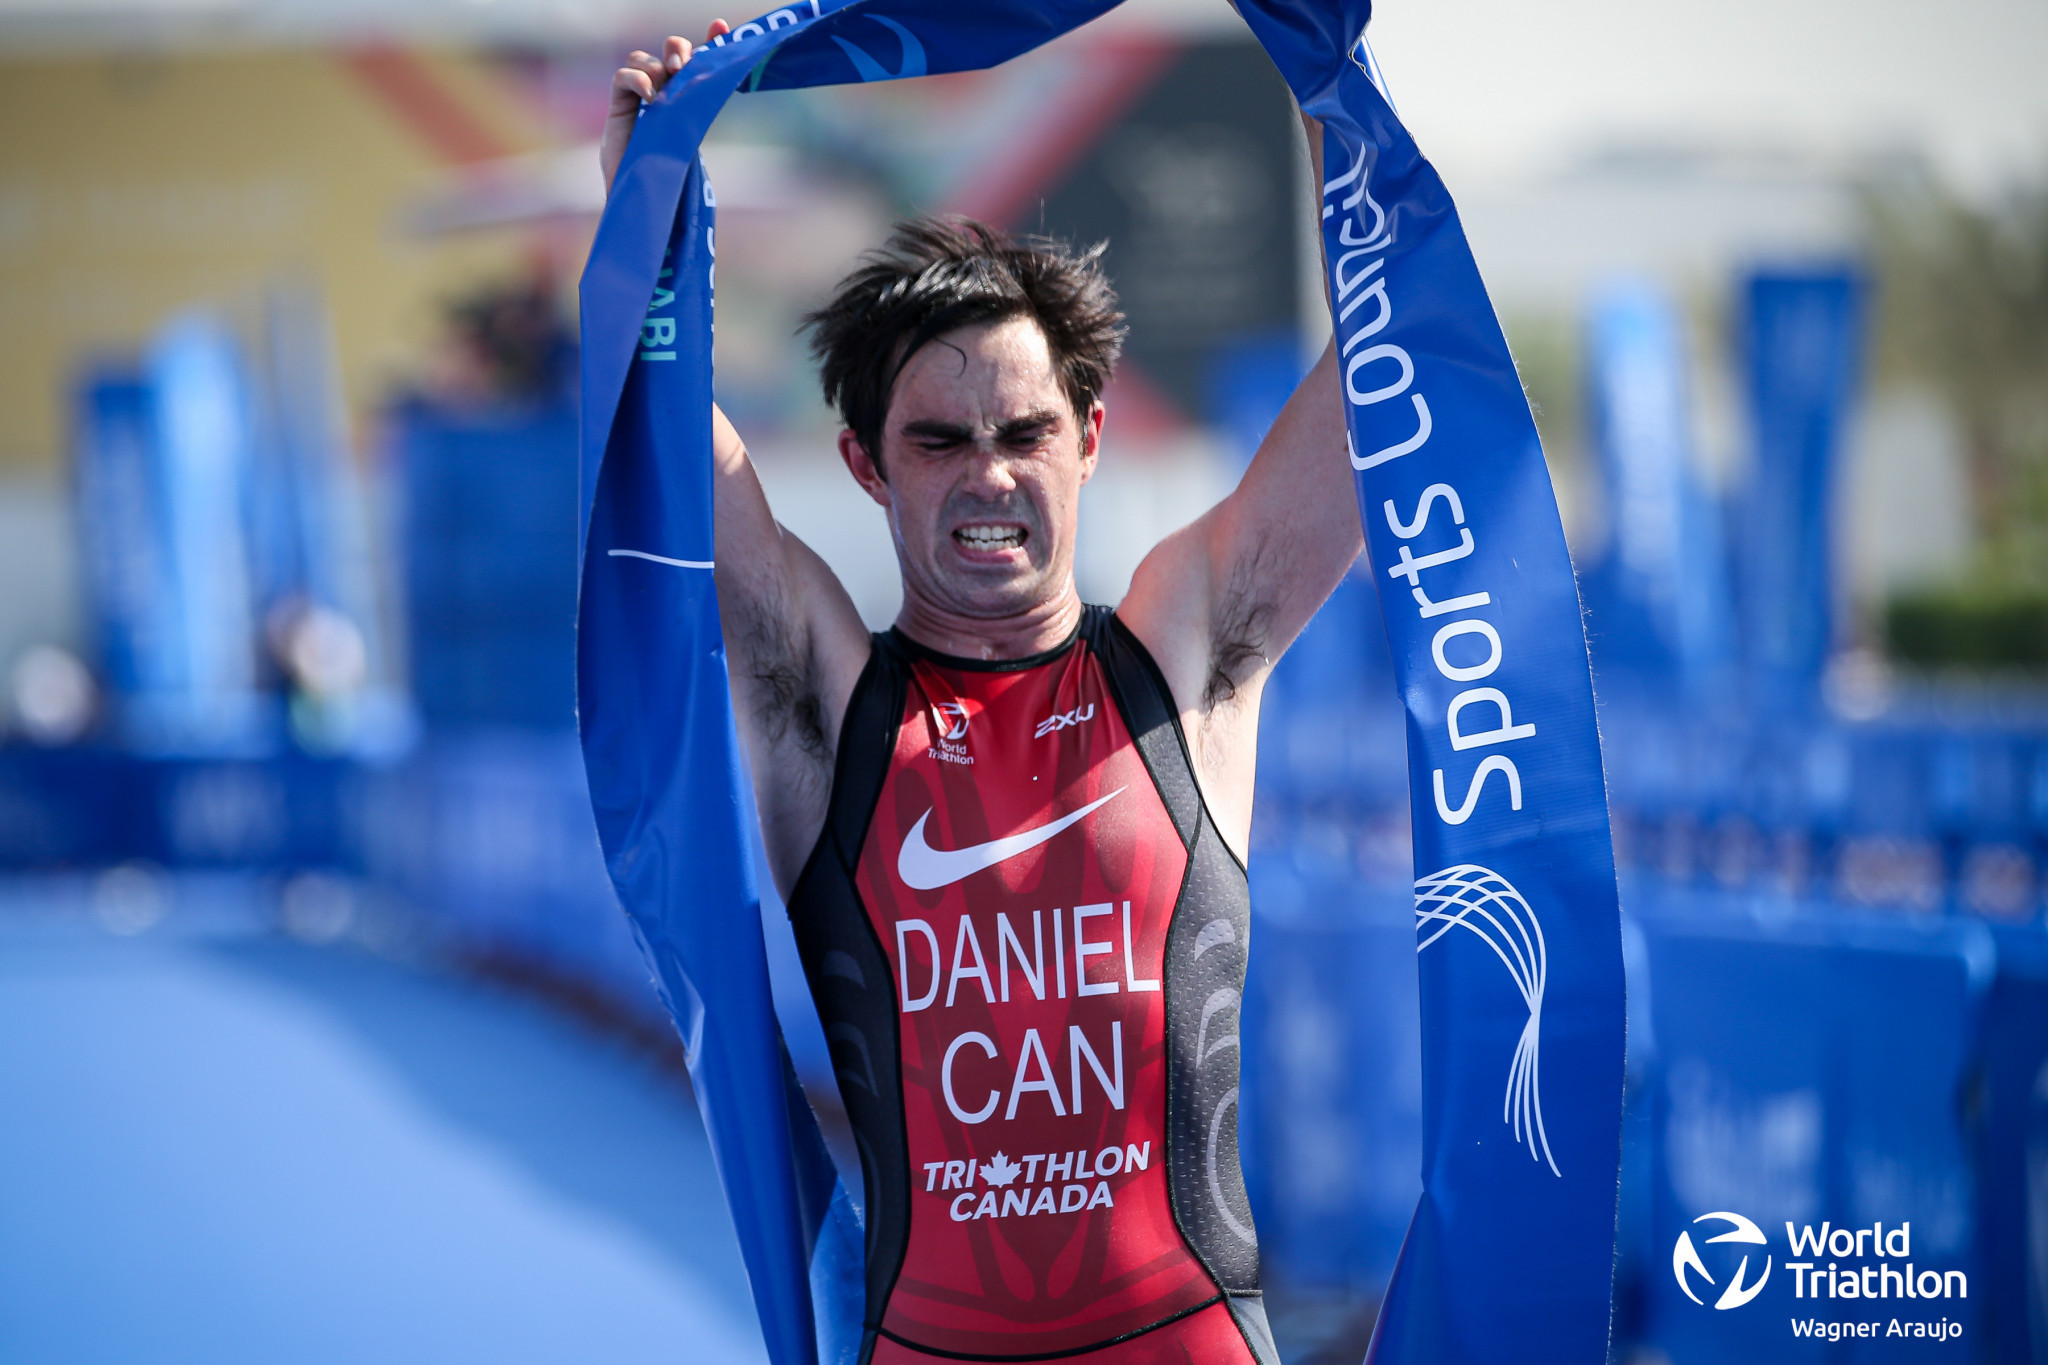 Canada's Stefan Daniel claimed a sensational victory in the men's PTS5 race ©World Triathlon